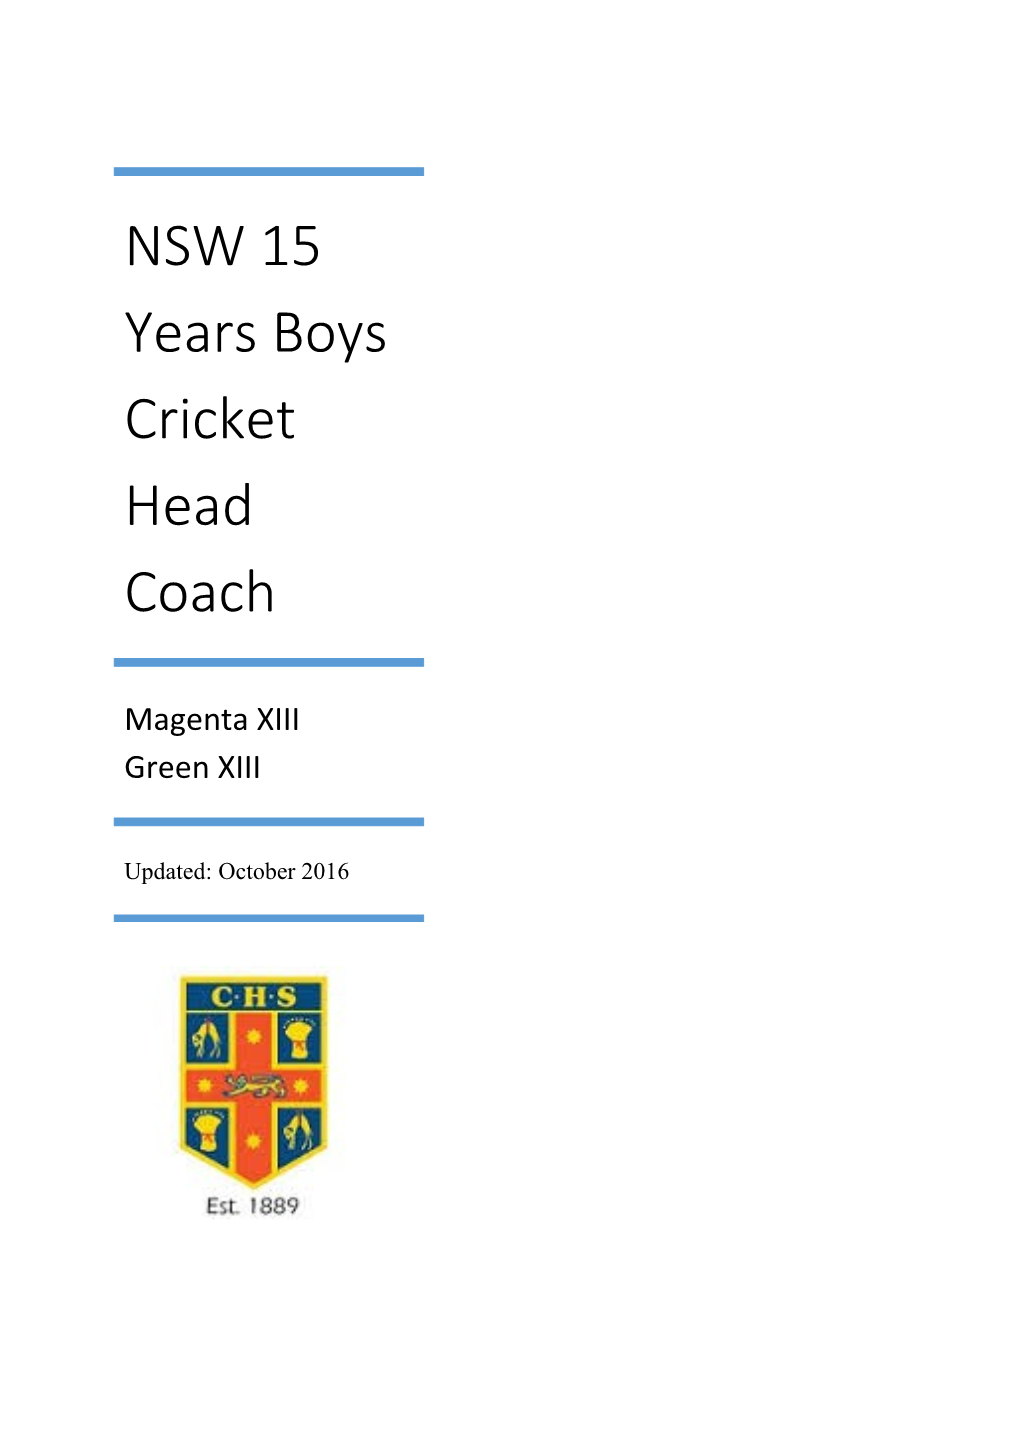 NSW 15 Years Boys Cricket Head Coach